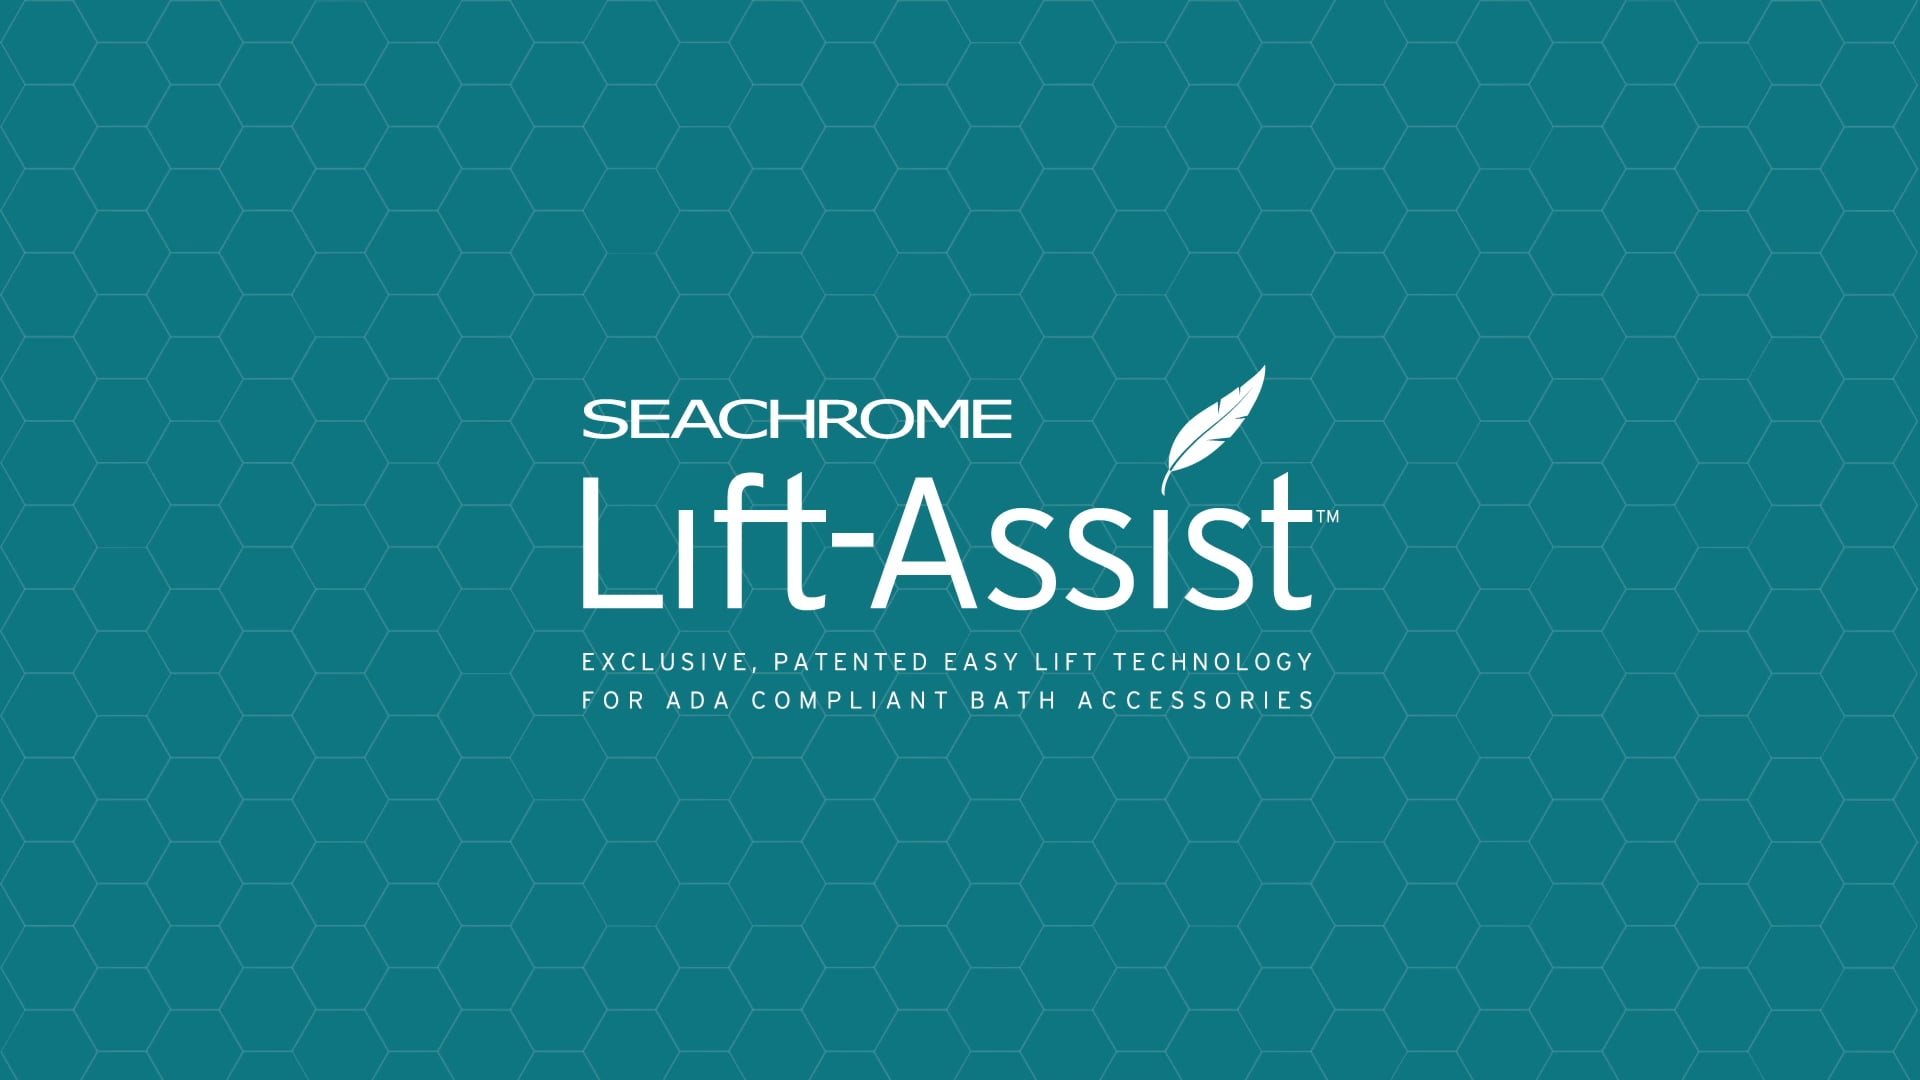 Seachrome Lift-Assist Technology for ADA-Compliant Shower Seats